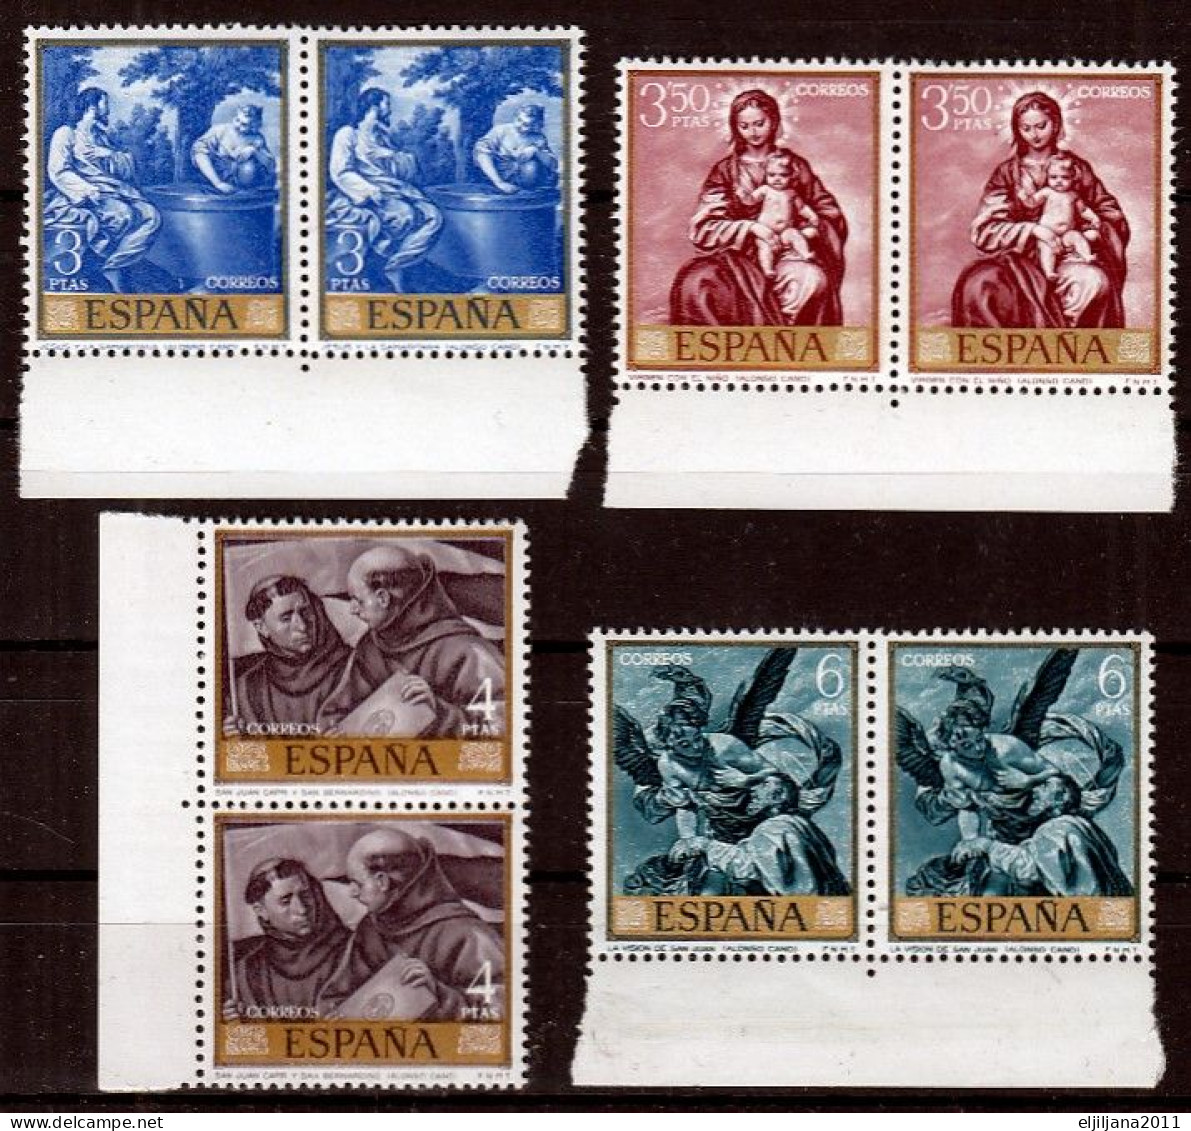 ⁕ SPAIN / ESPANA 1969 ⁕ Alonso Cano (stamp Day) Art Painting Gemalde Mi.1796-1805 X2 ⁕ MNH - Neufs